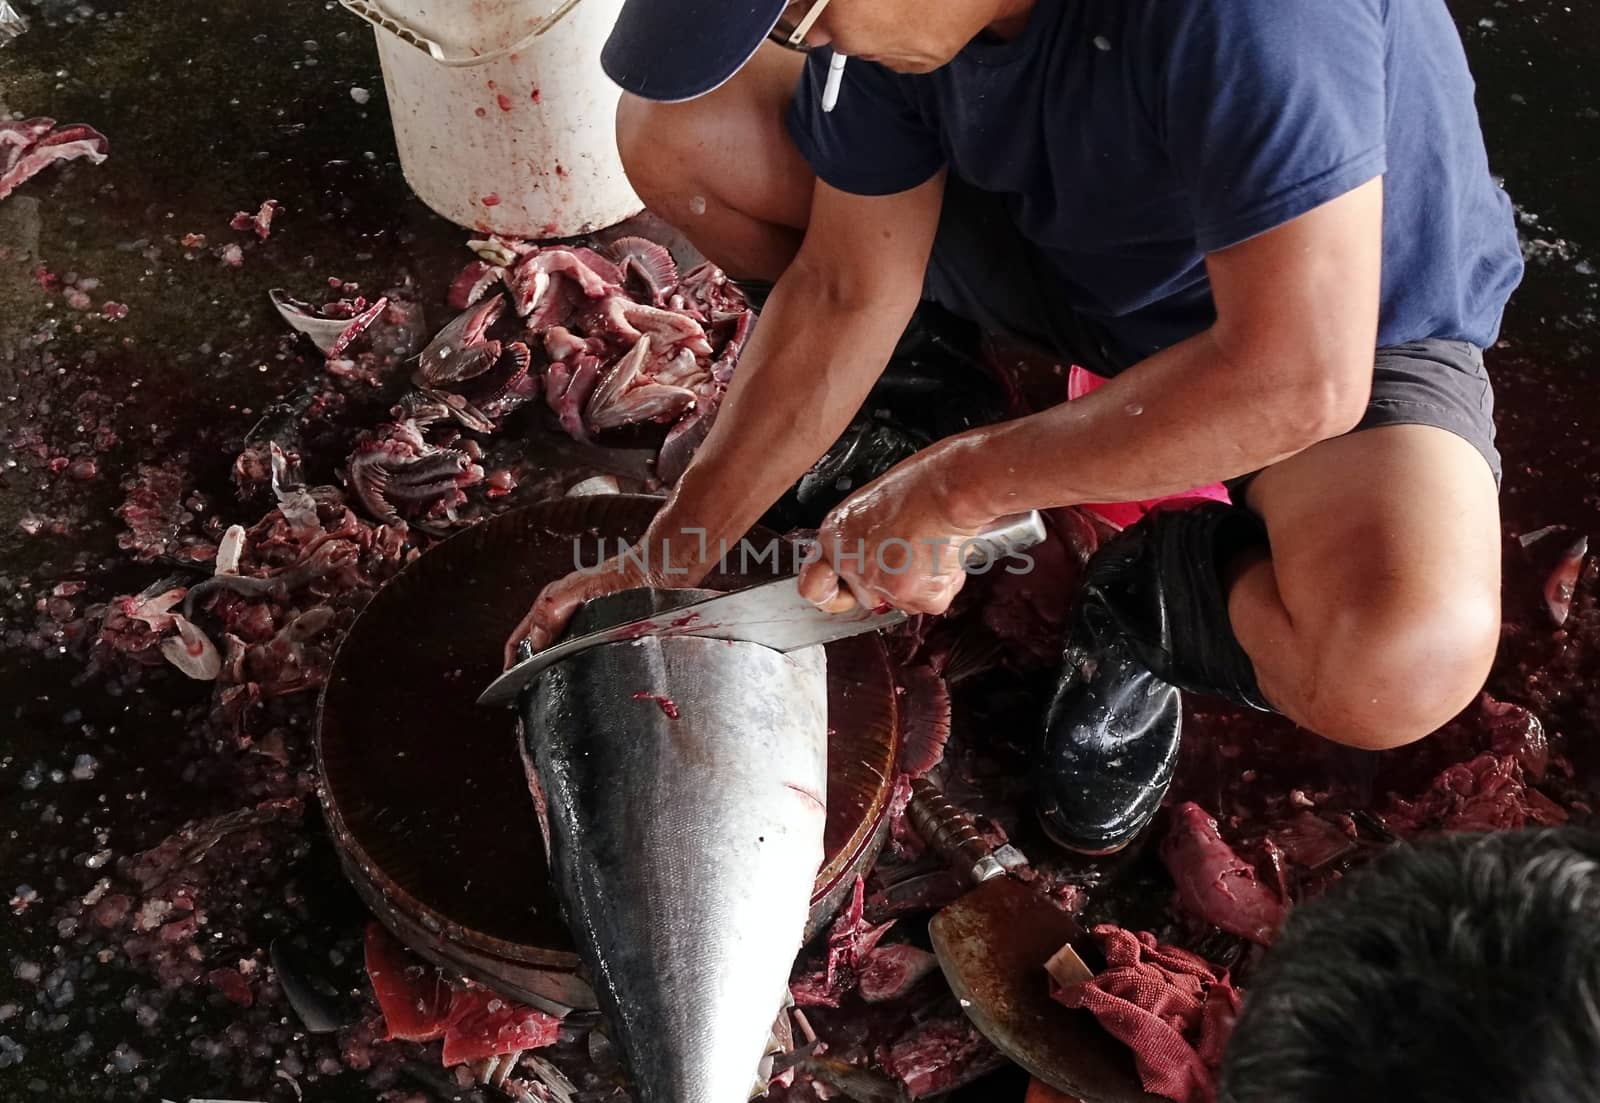 KAOHSIUNG, TAIWAN -- MAY 9, 2015: A local fishmonger cleans and slices a large tuna fish at the Sinda fishmarket.